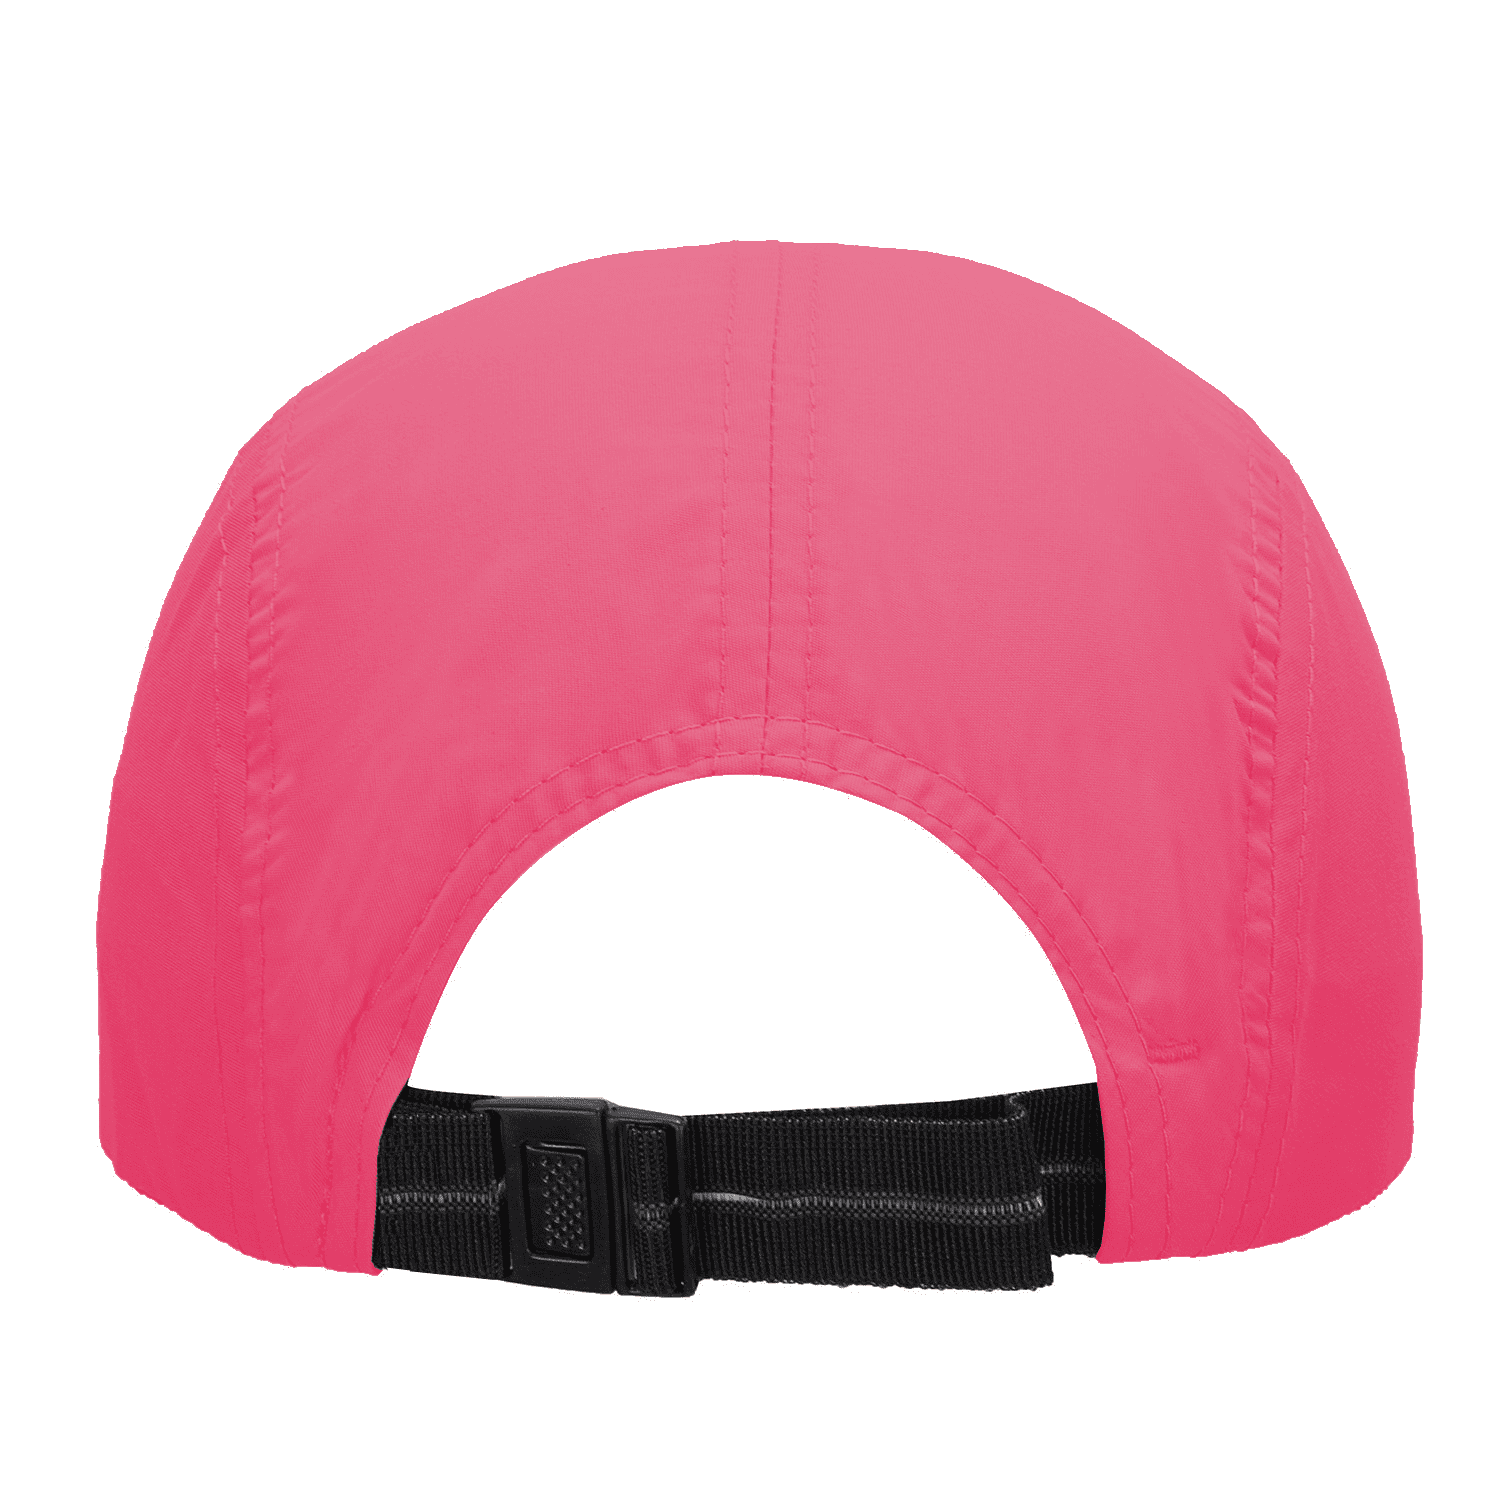 Unisex Dry Cap Sun Pink UPF Long Hats, 50+ Quick with Bill Portable Foldable Hot Baseball